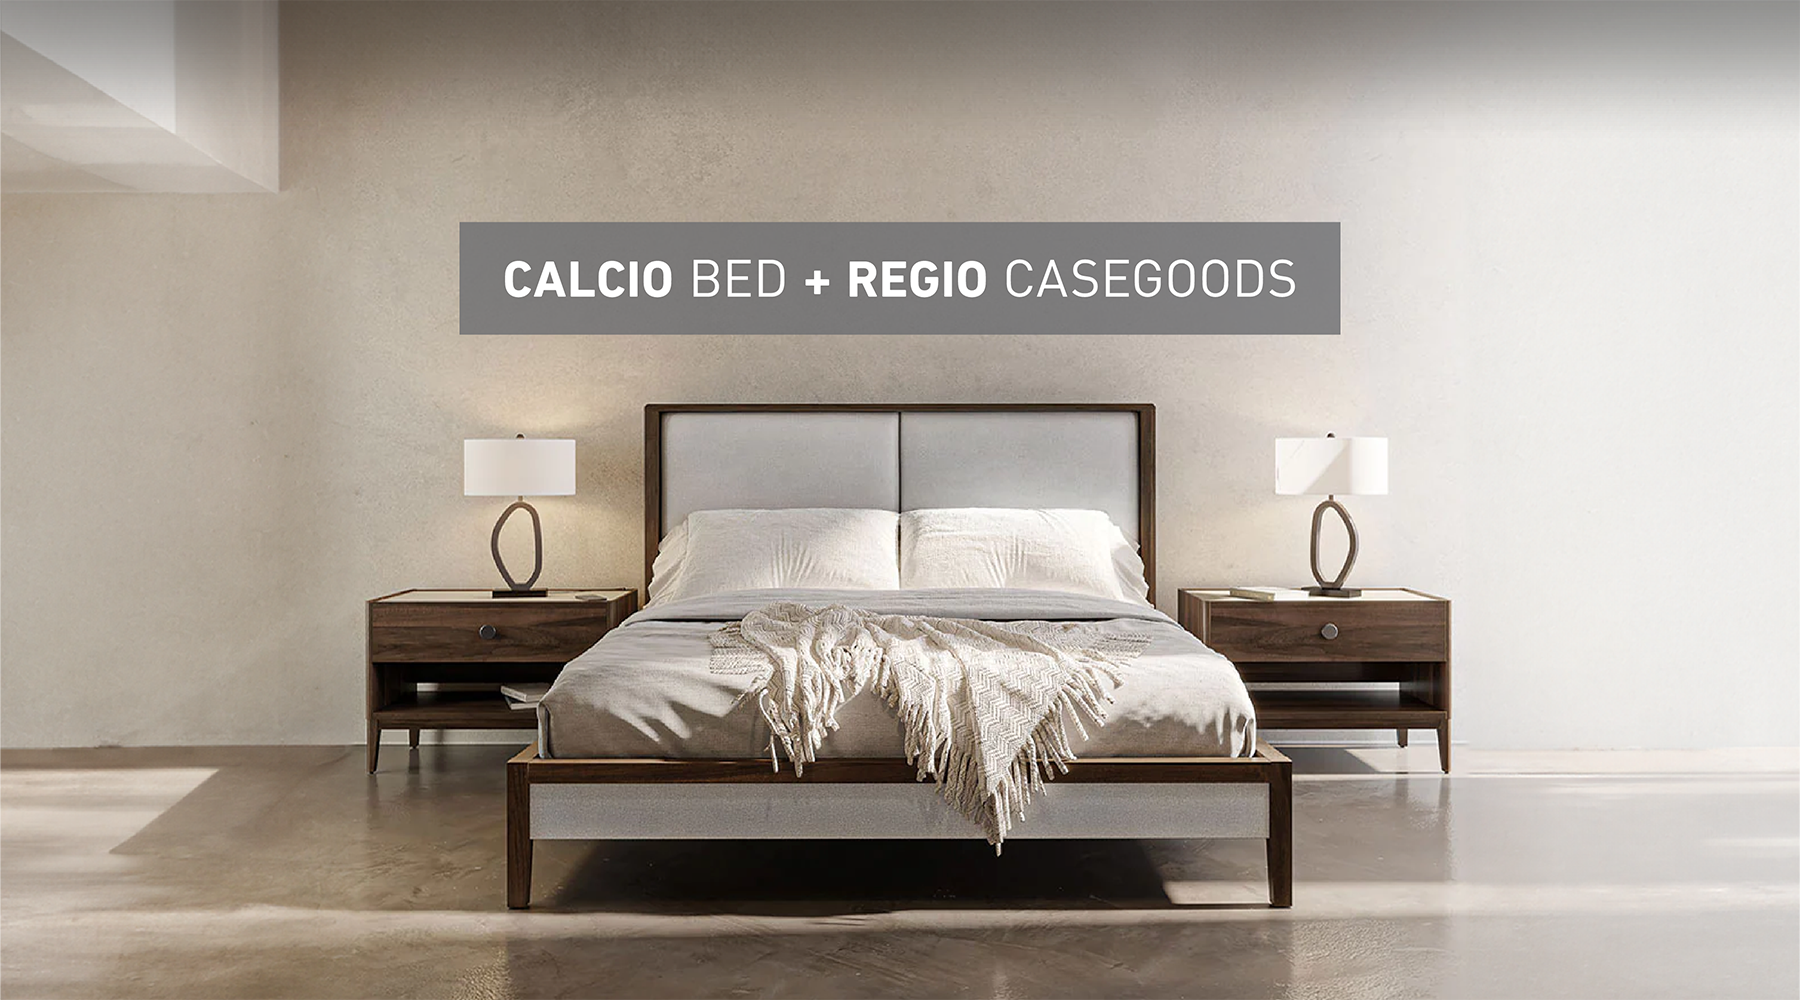 Calcio Bedroom and Regio Casegoods